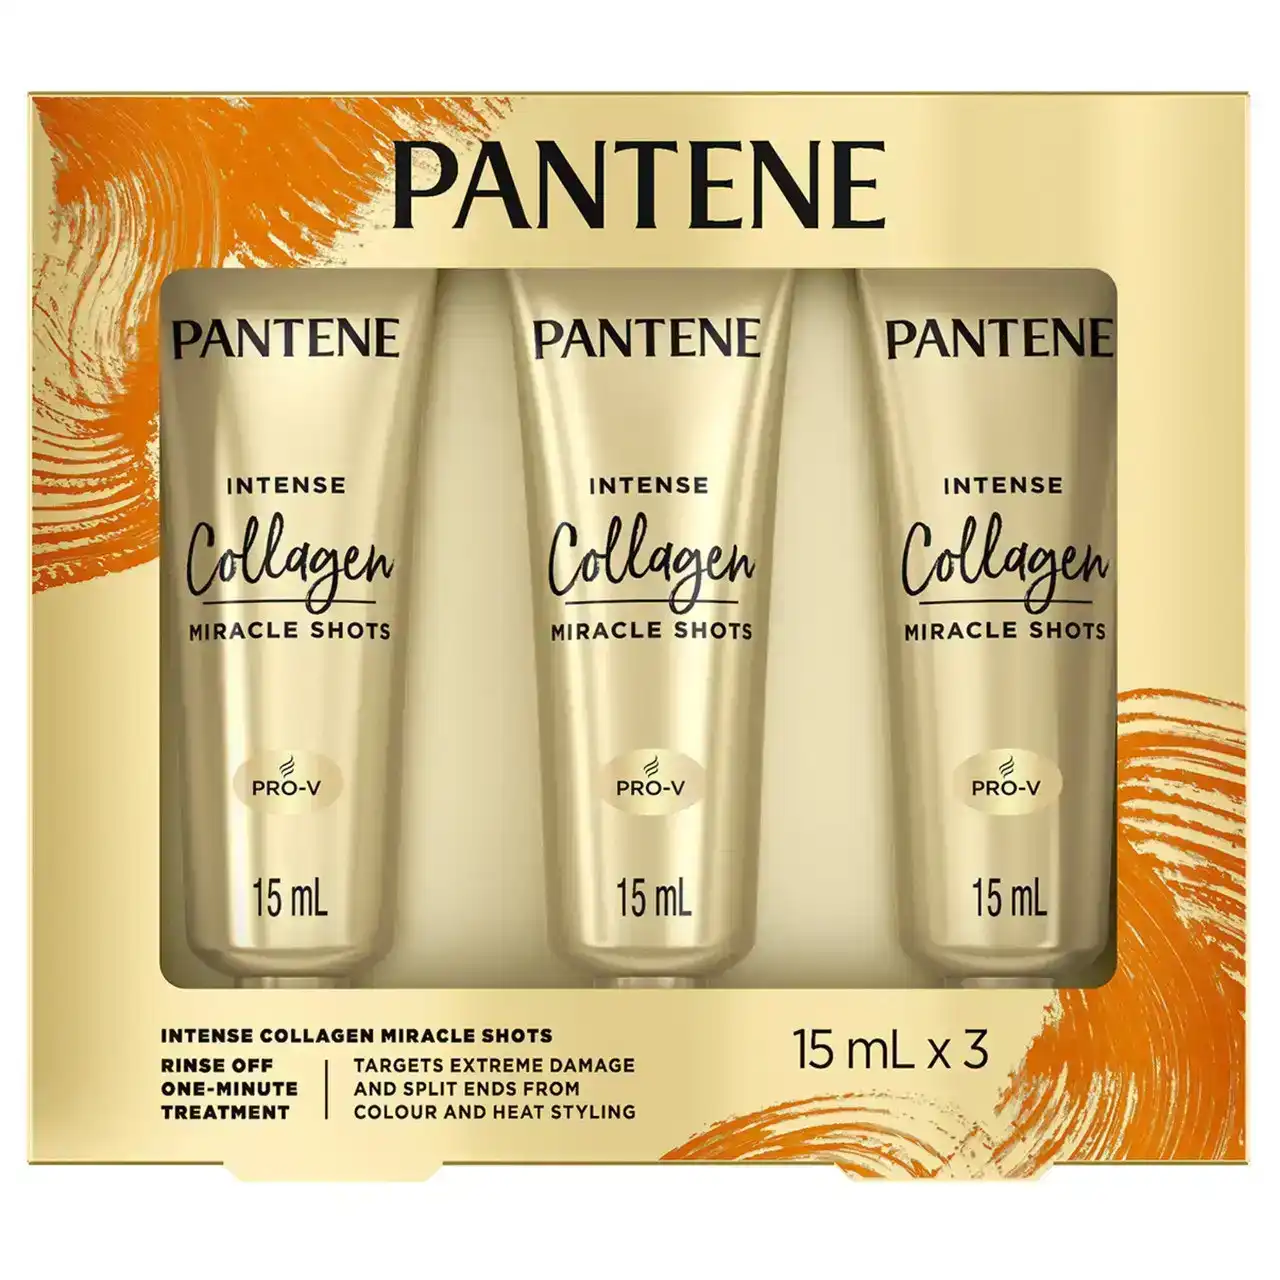 Pantene Intense Collagen Miracle Shots Treatment 15ml x 3